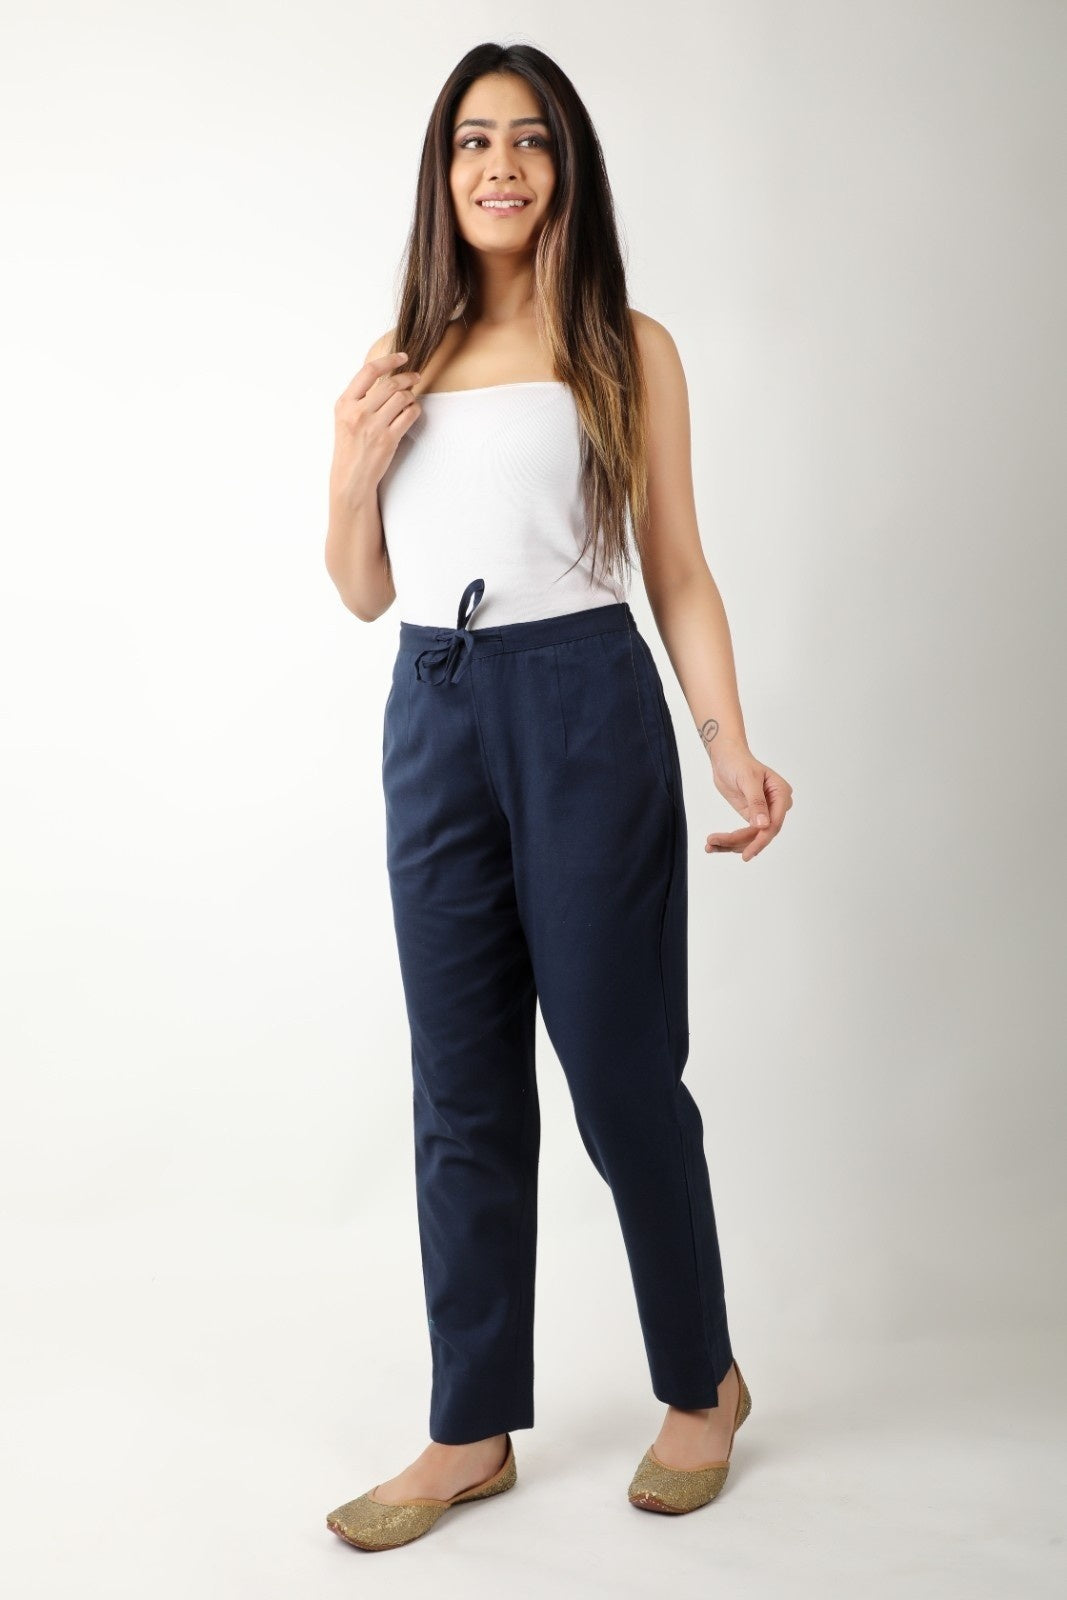 Frank Leder Paper Cotton Trouser - Grey on Garmentory | Trousers, Khaki  pants, Pants